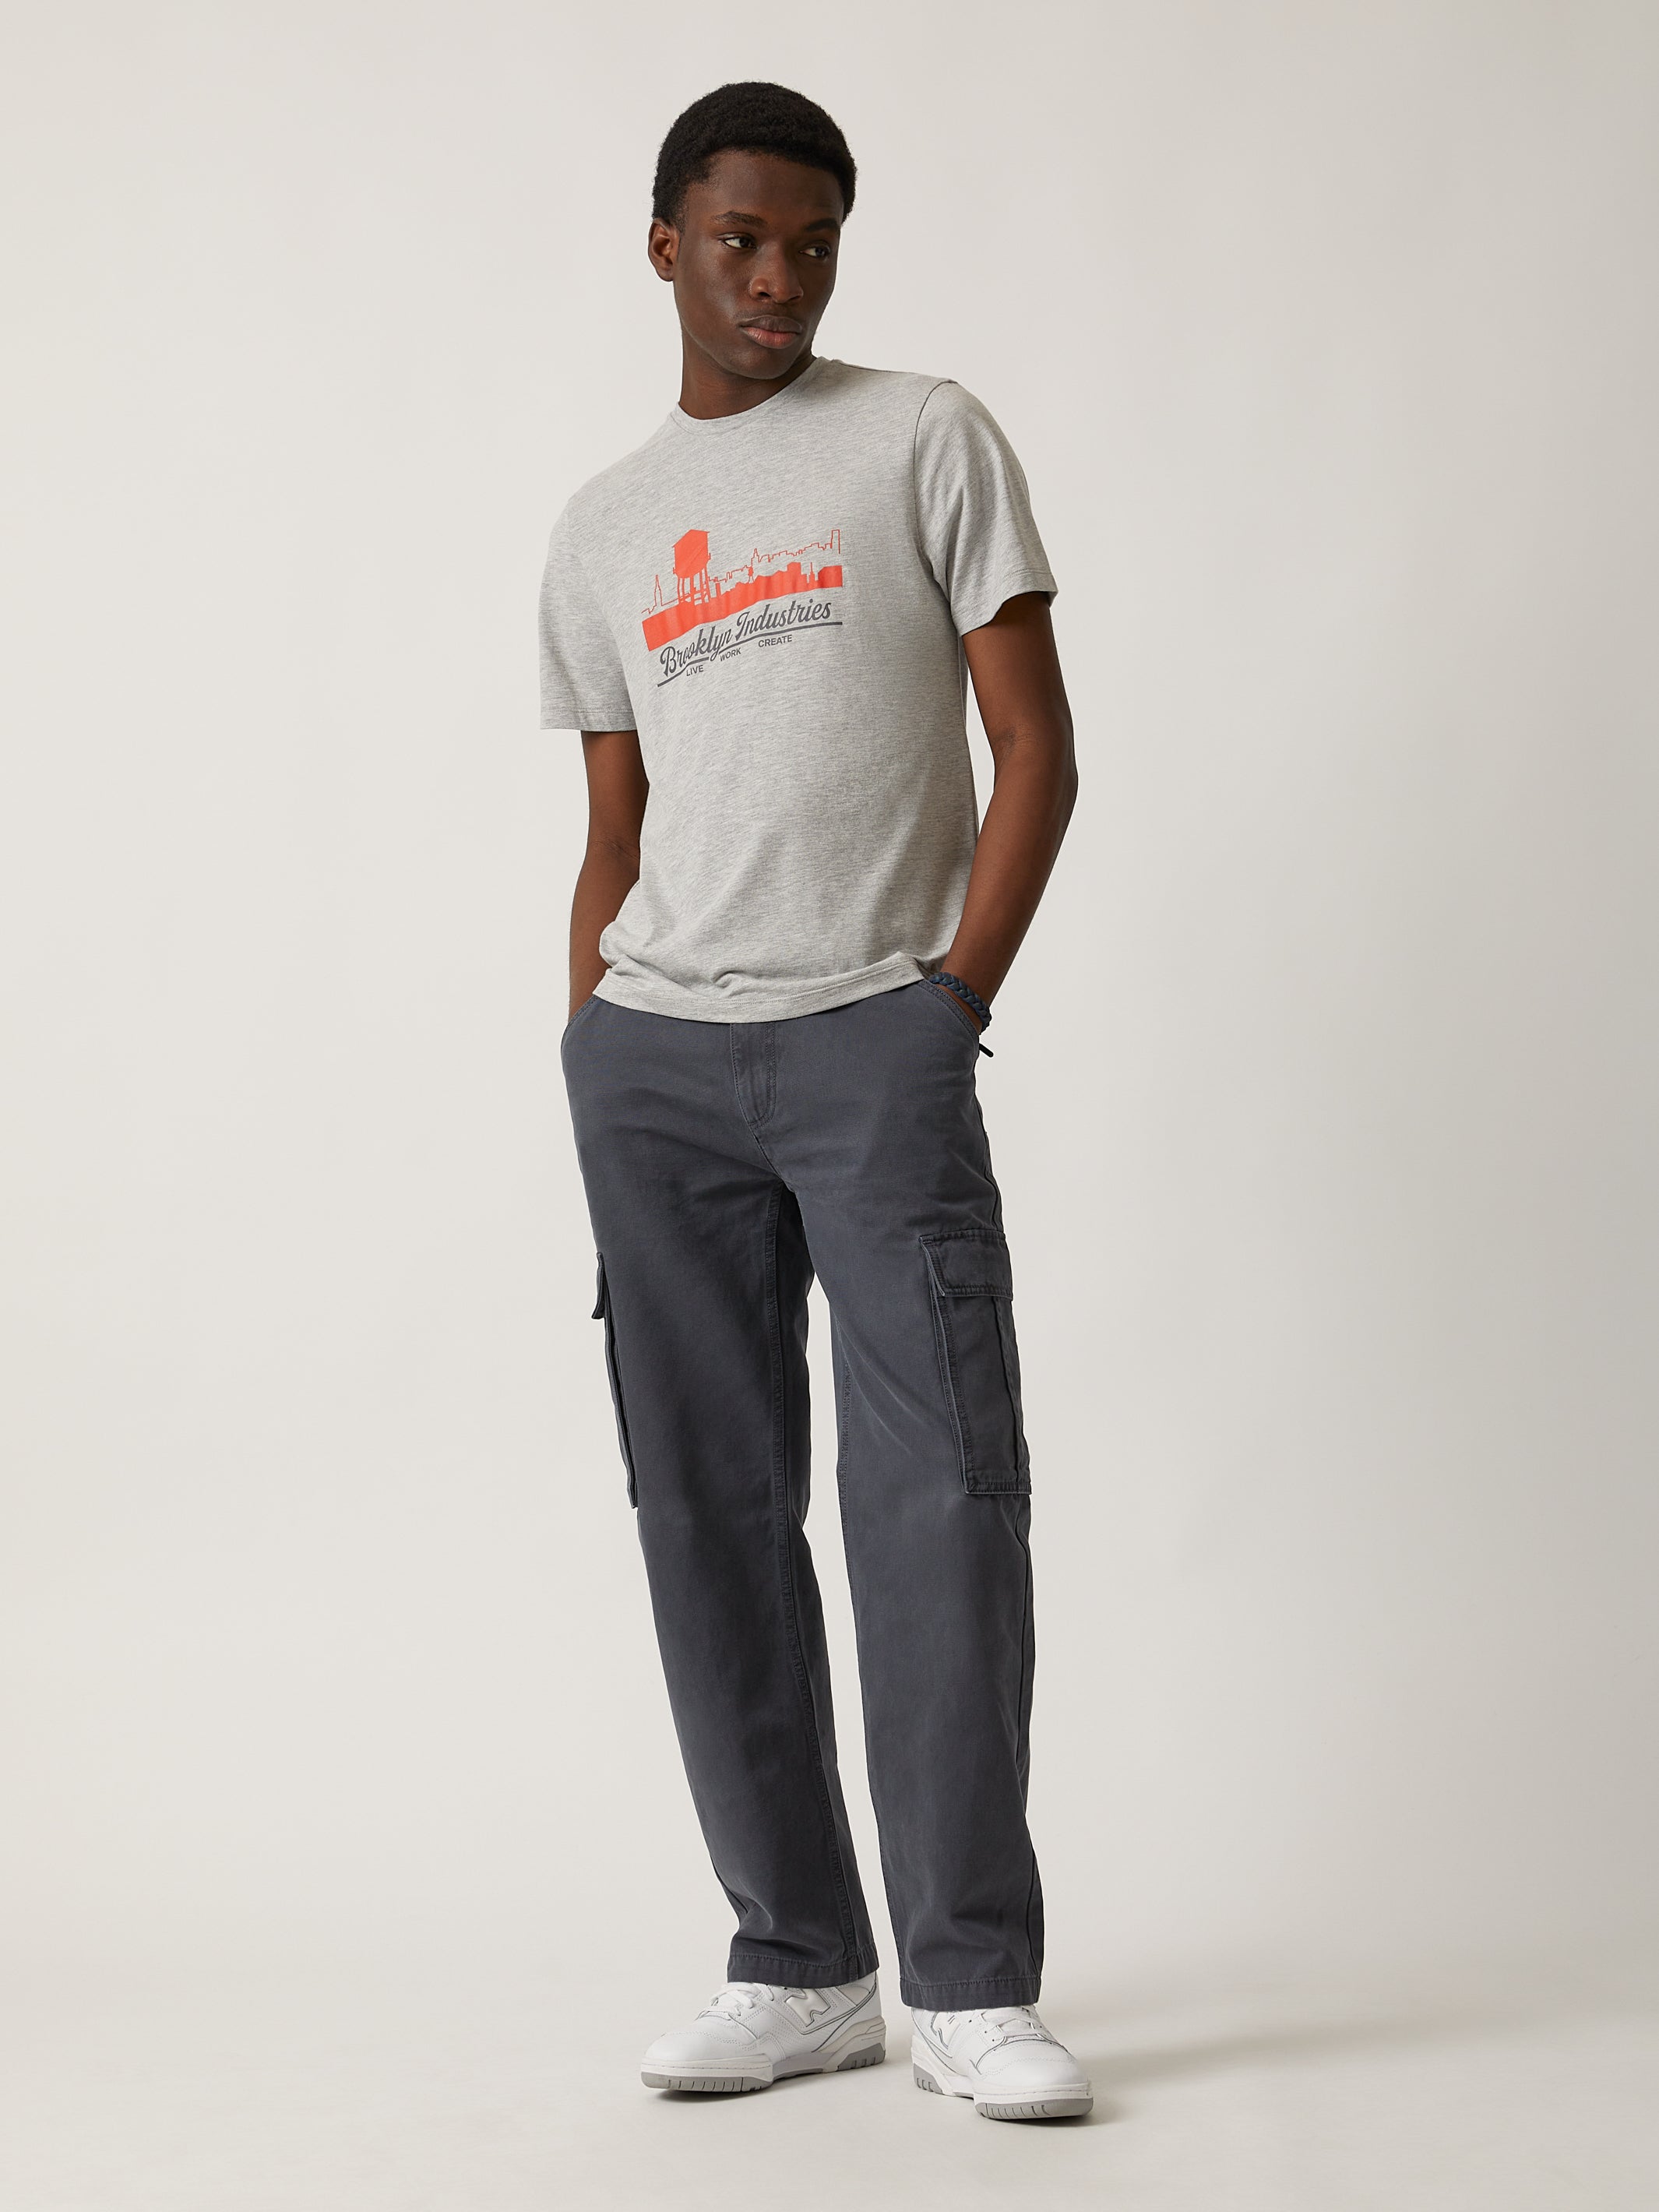 Men's Brooklyn Silhouette T-shirt in Grey Melange - BROOKLYN INDUSTRIES